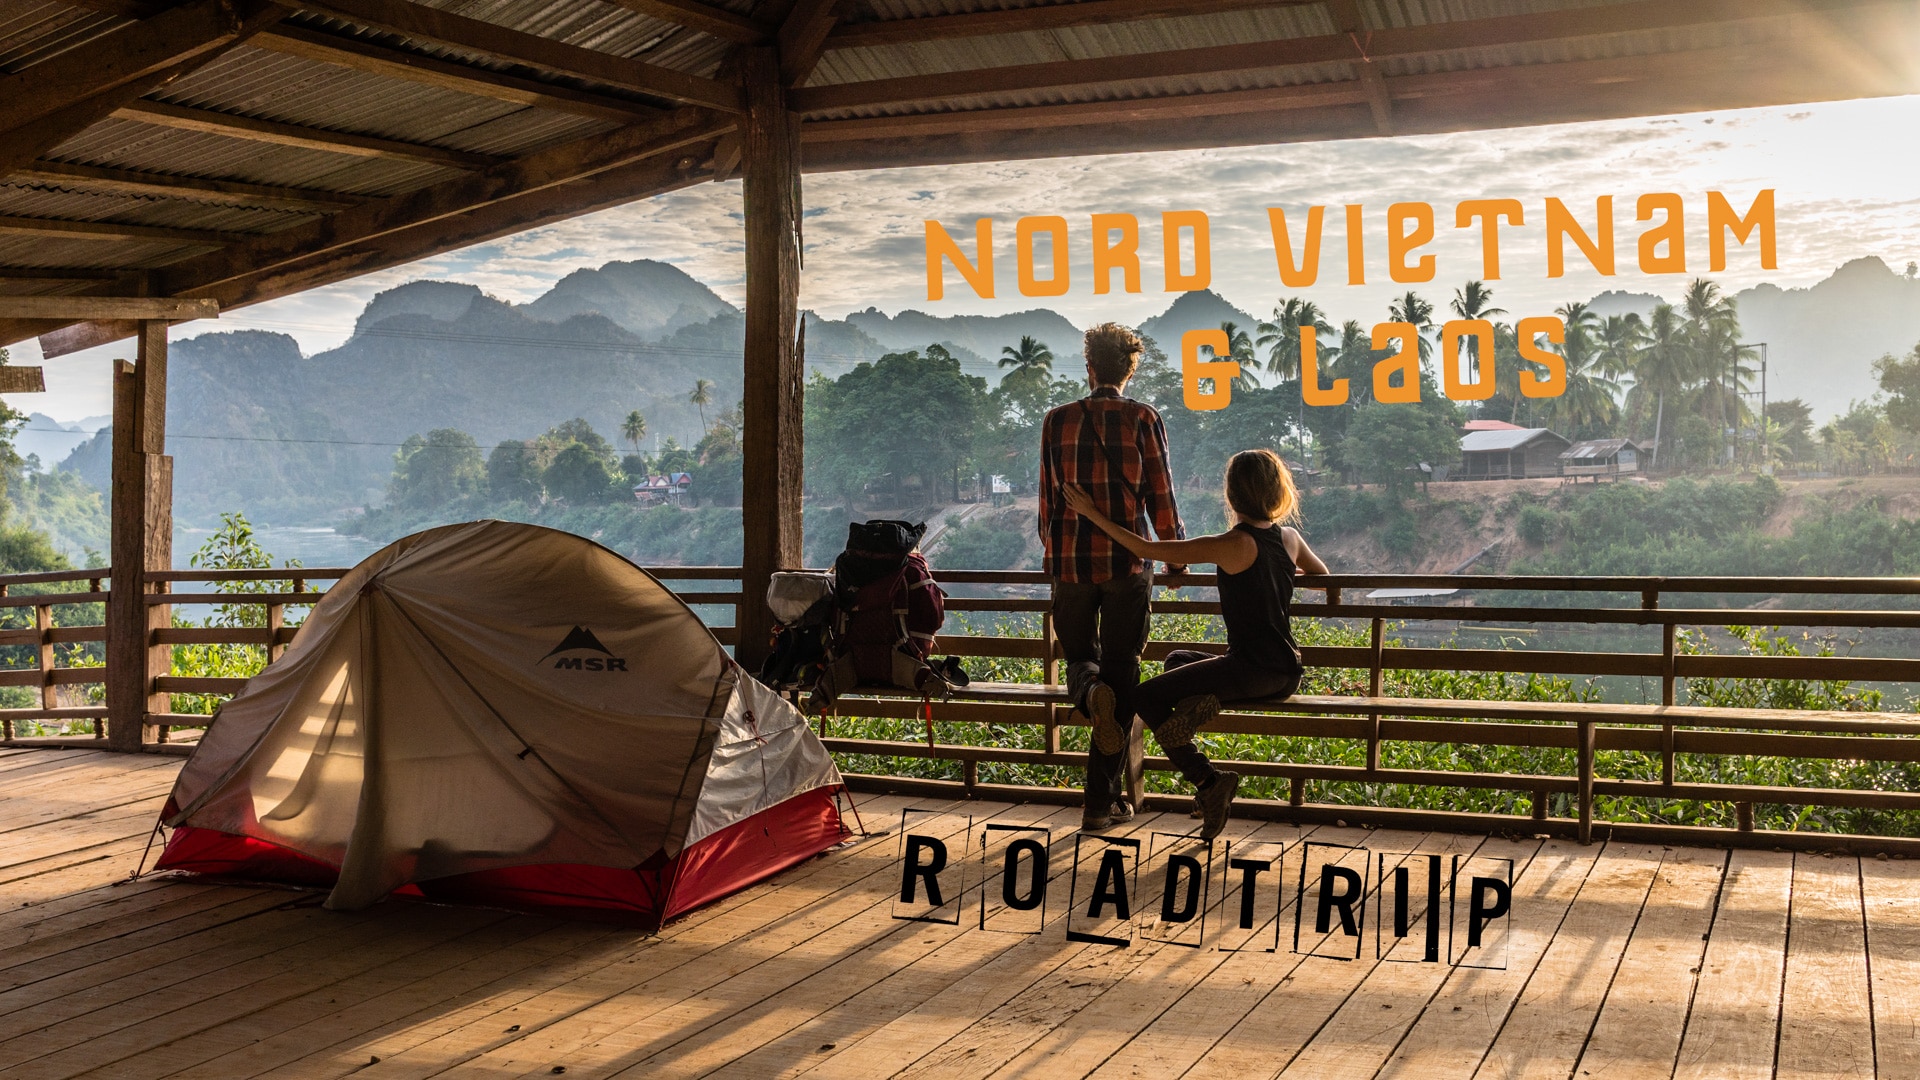 SerialHikers stop autostop world monde tour hitchhiking aventure adventure alternative travel voyage sans avion no fly roadtrip newsletter laos vietnam nord